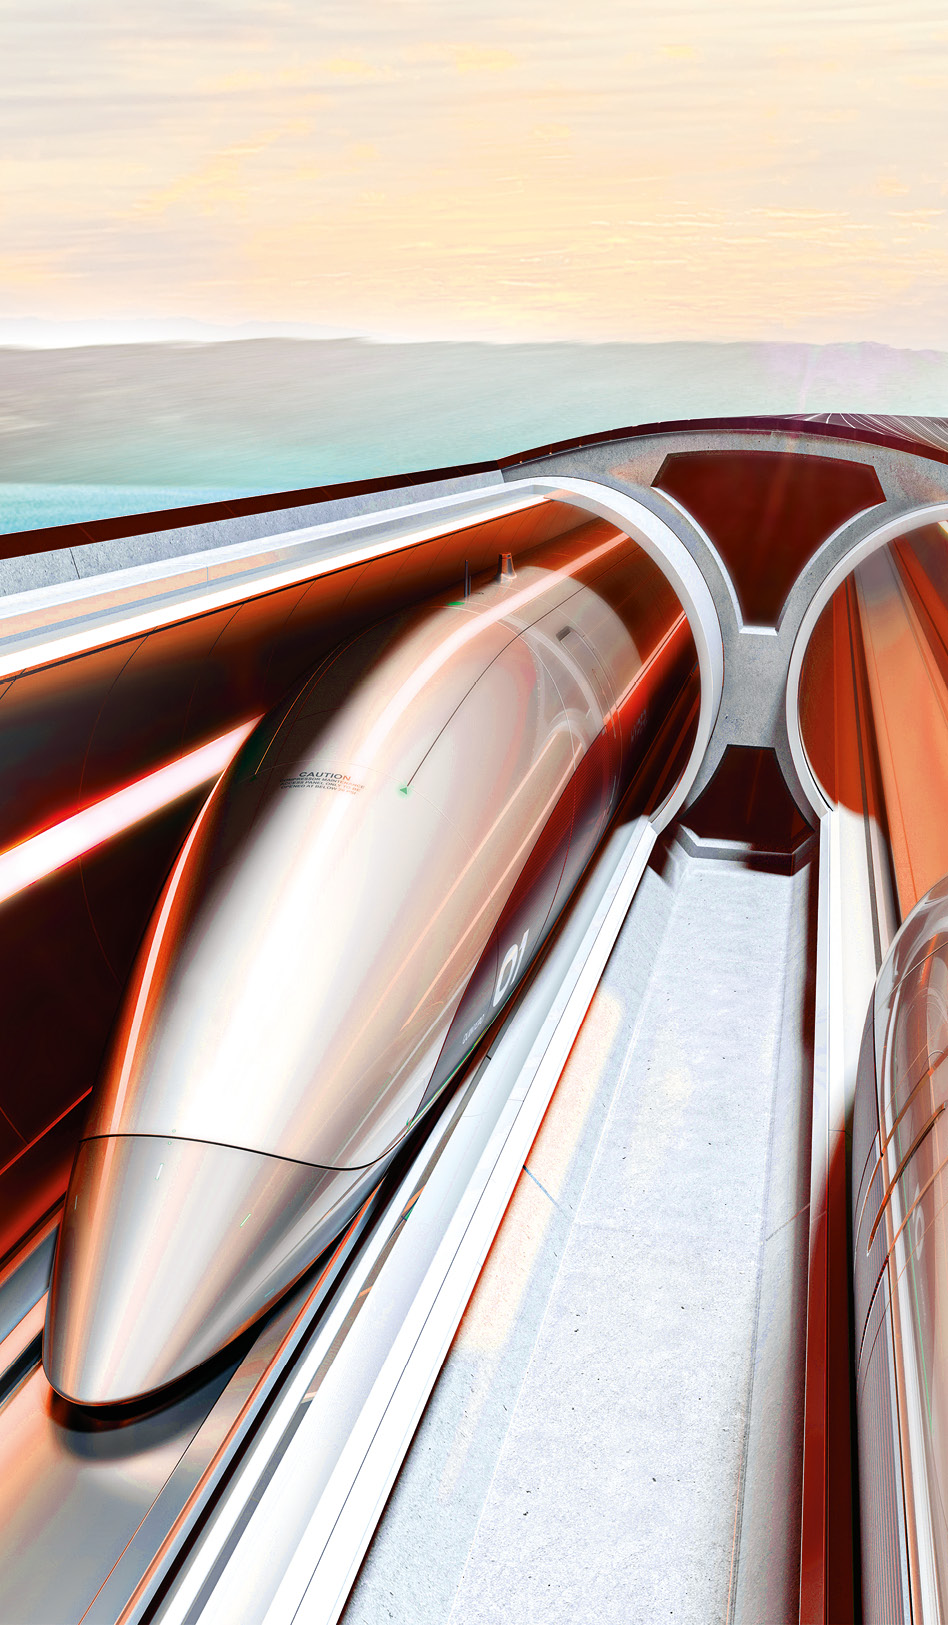 Future Mobility Hyperloop